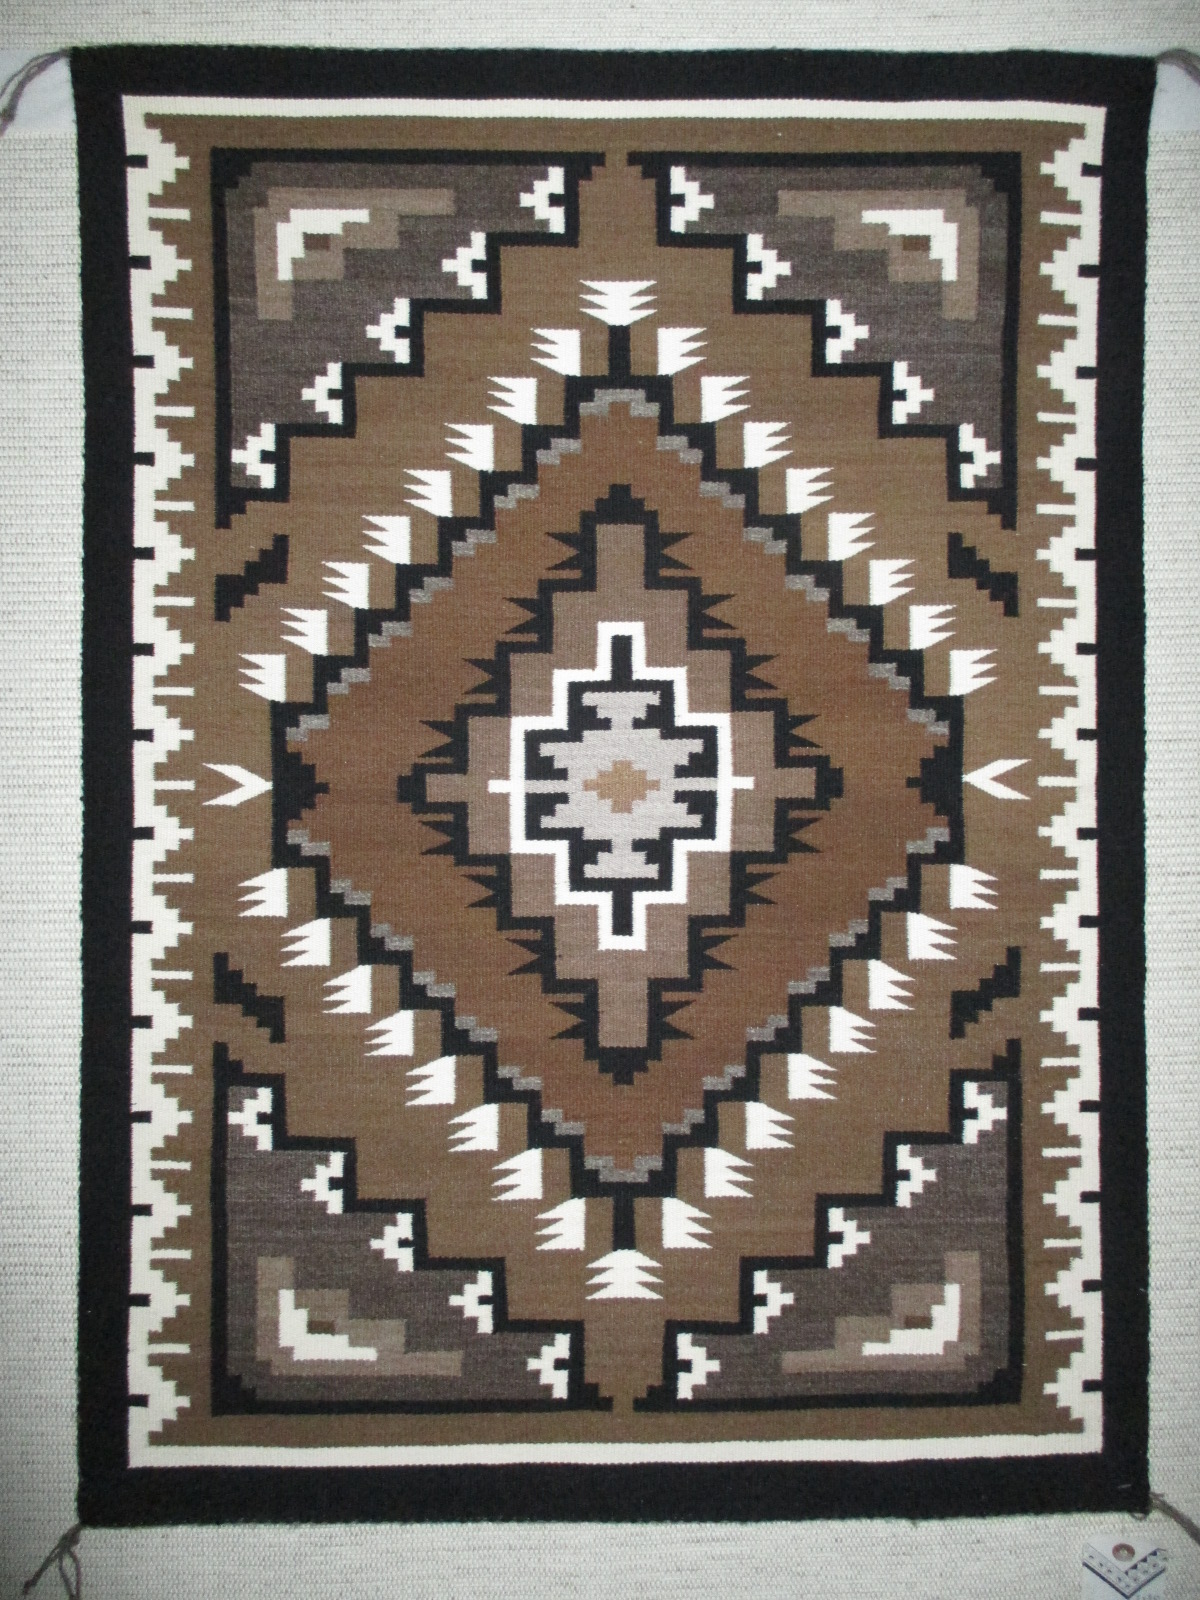 Two Grey Hills Navajo Rug by Native American Navajo Indian weaving artist, Larry Nathaniel